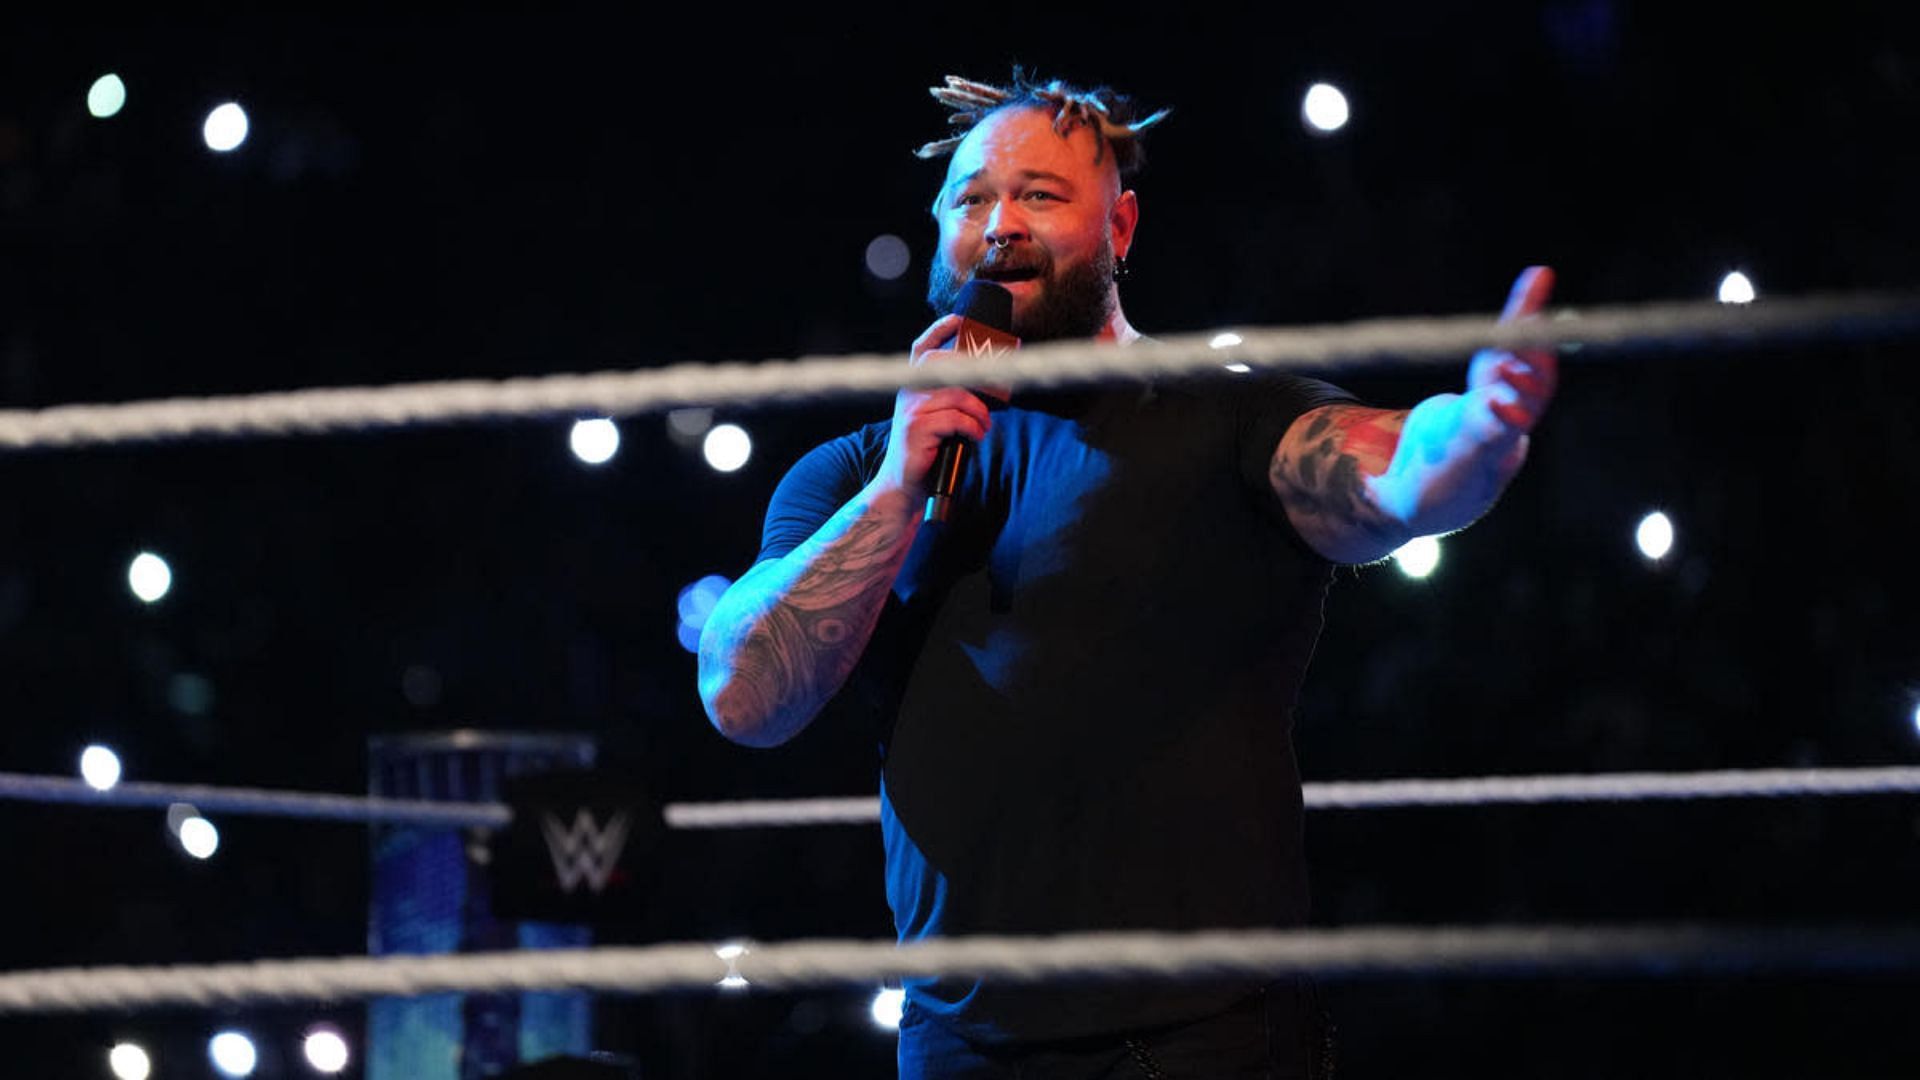 Bray Wyatt returned to WWE programming in October